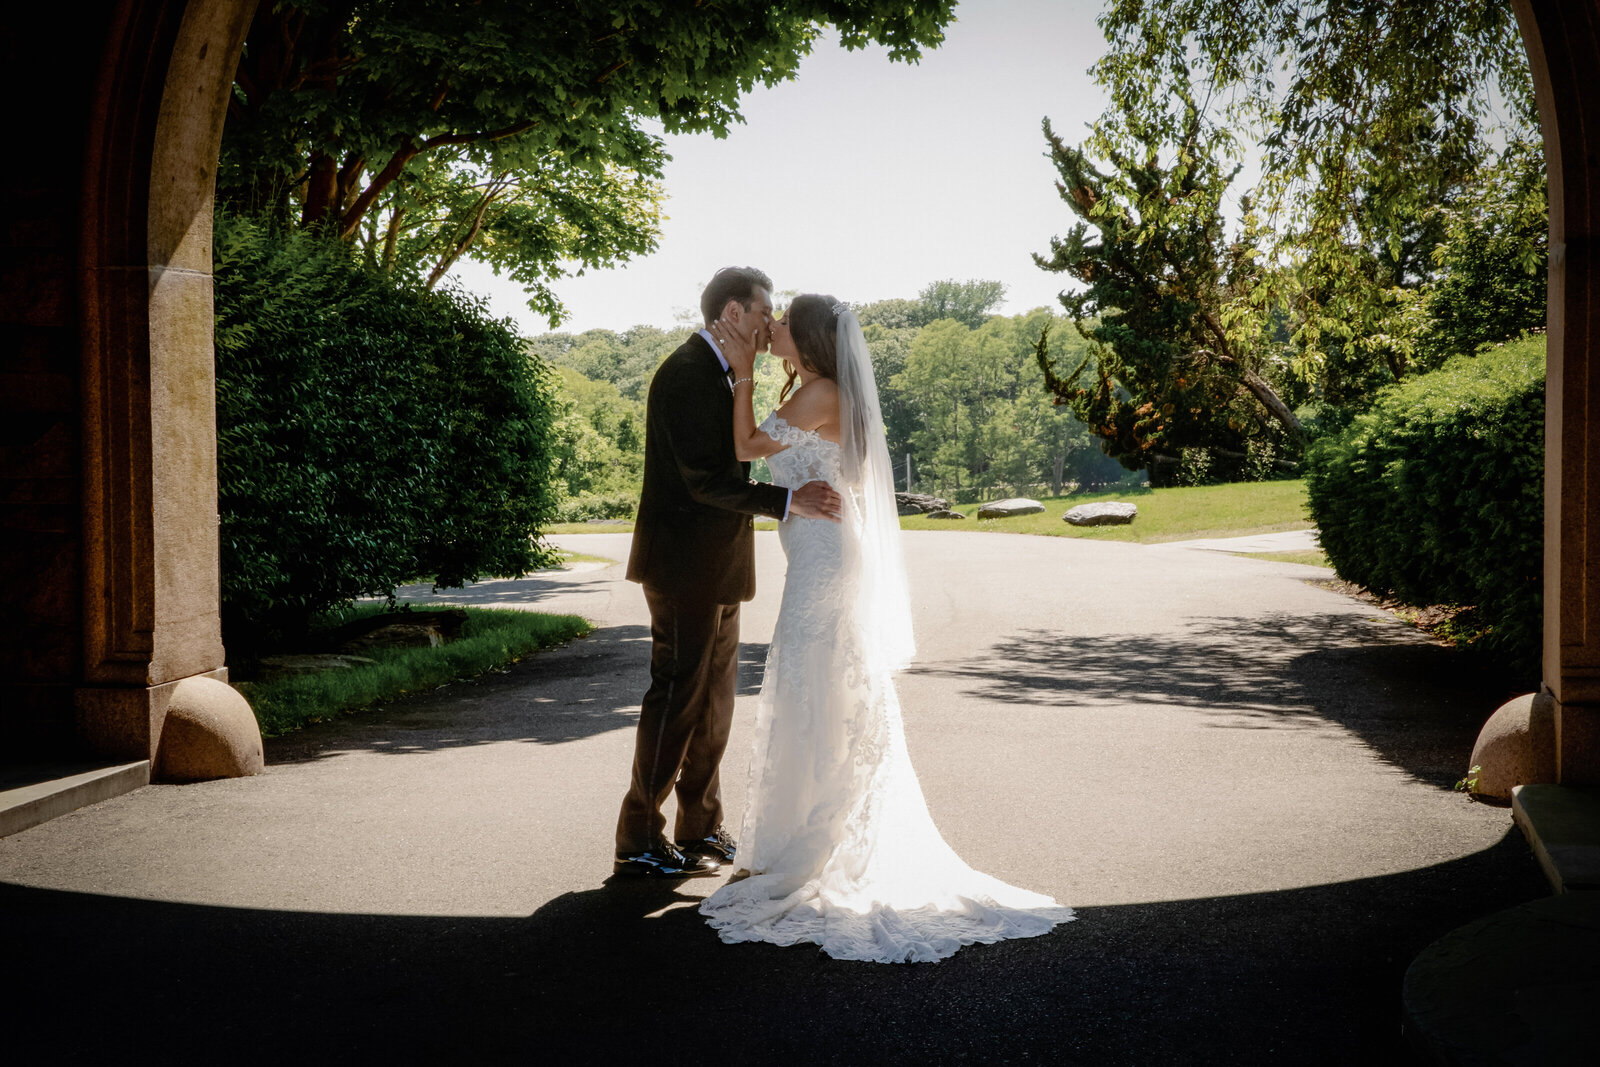 New-England-Wedding-Photographer-Sabrina-Scolari-43